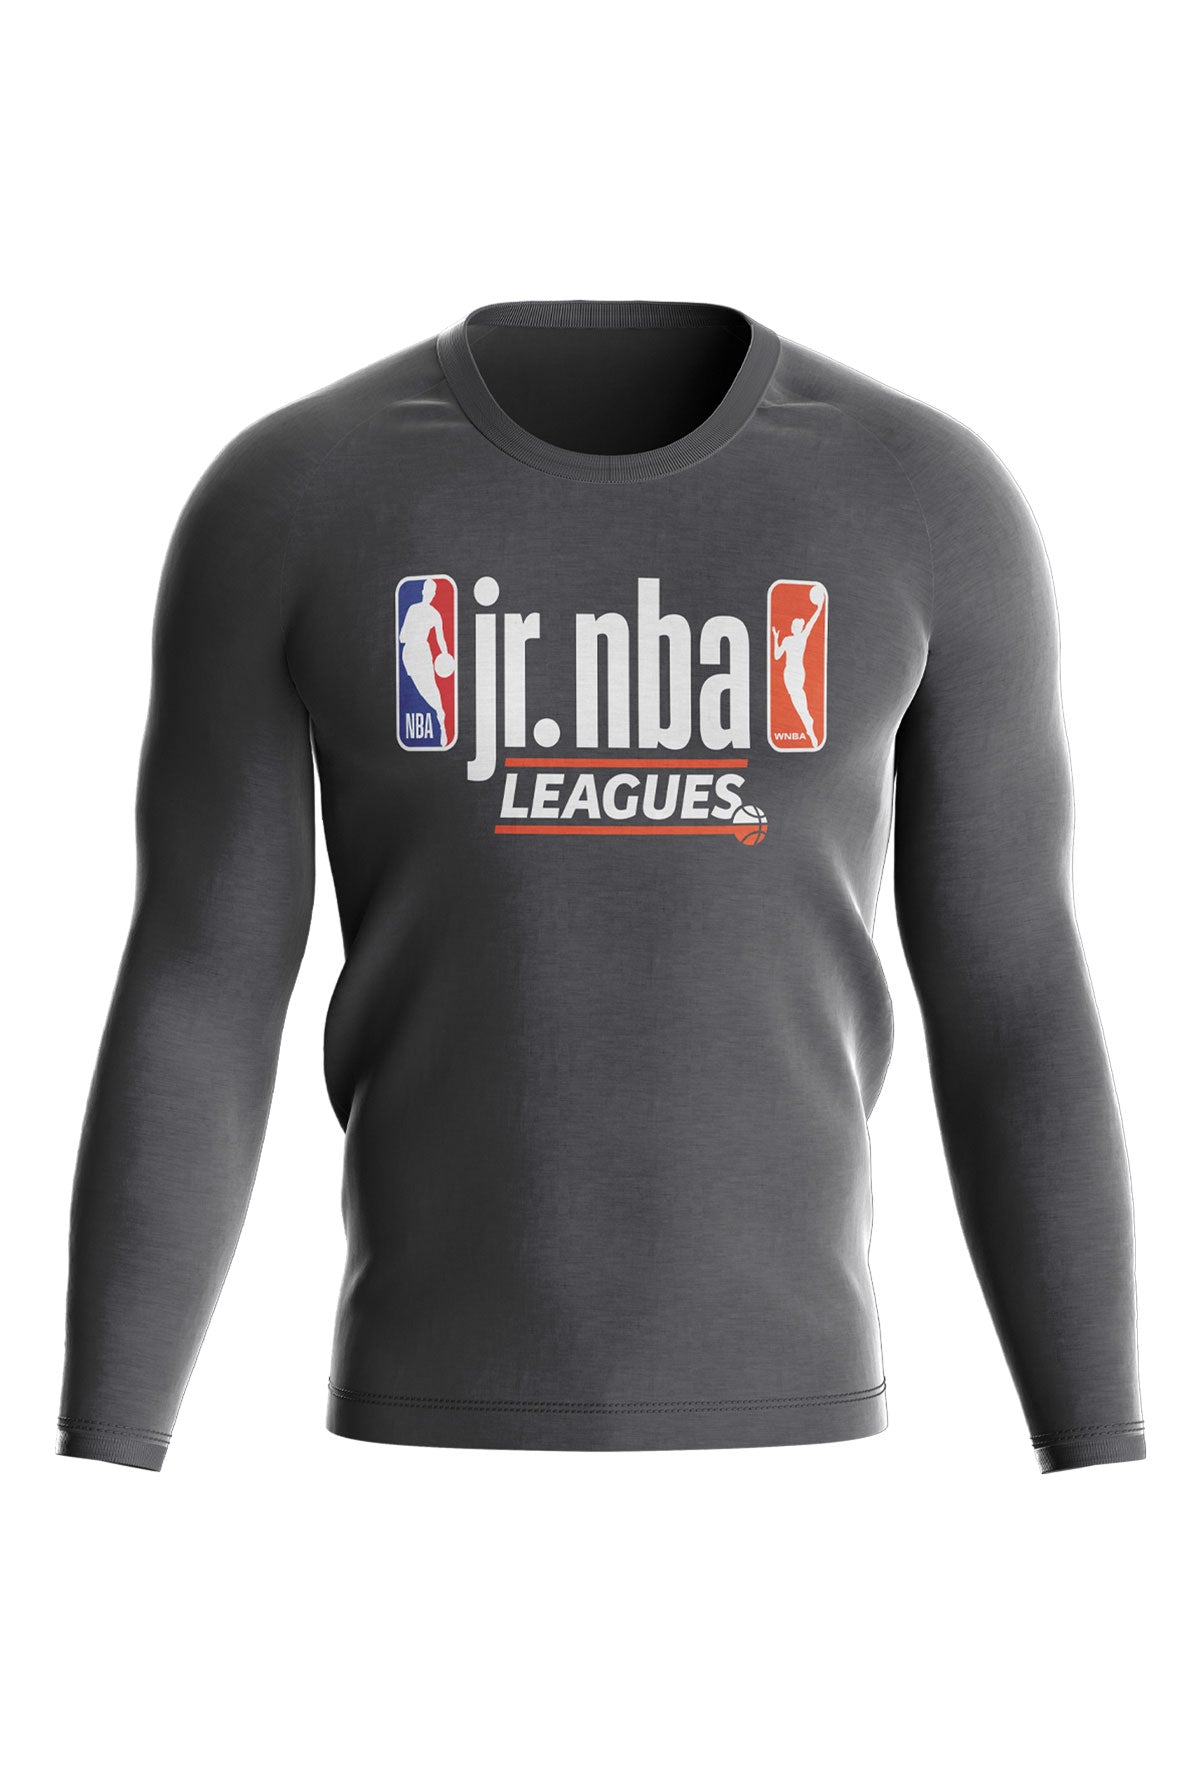 Jr. NBA Leagues Warmup Long Sleeve Shirt